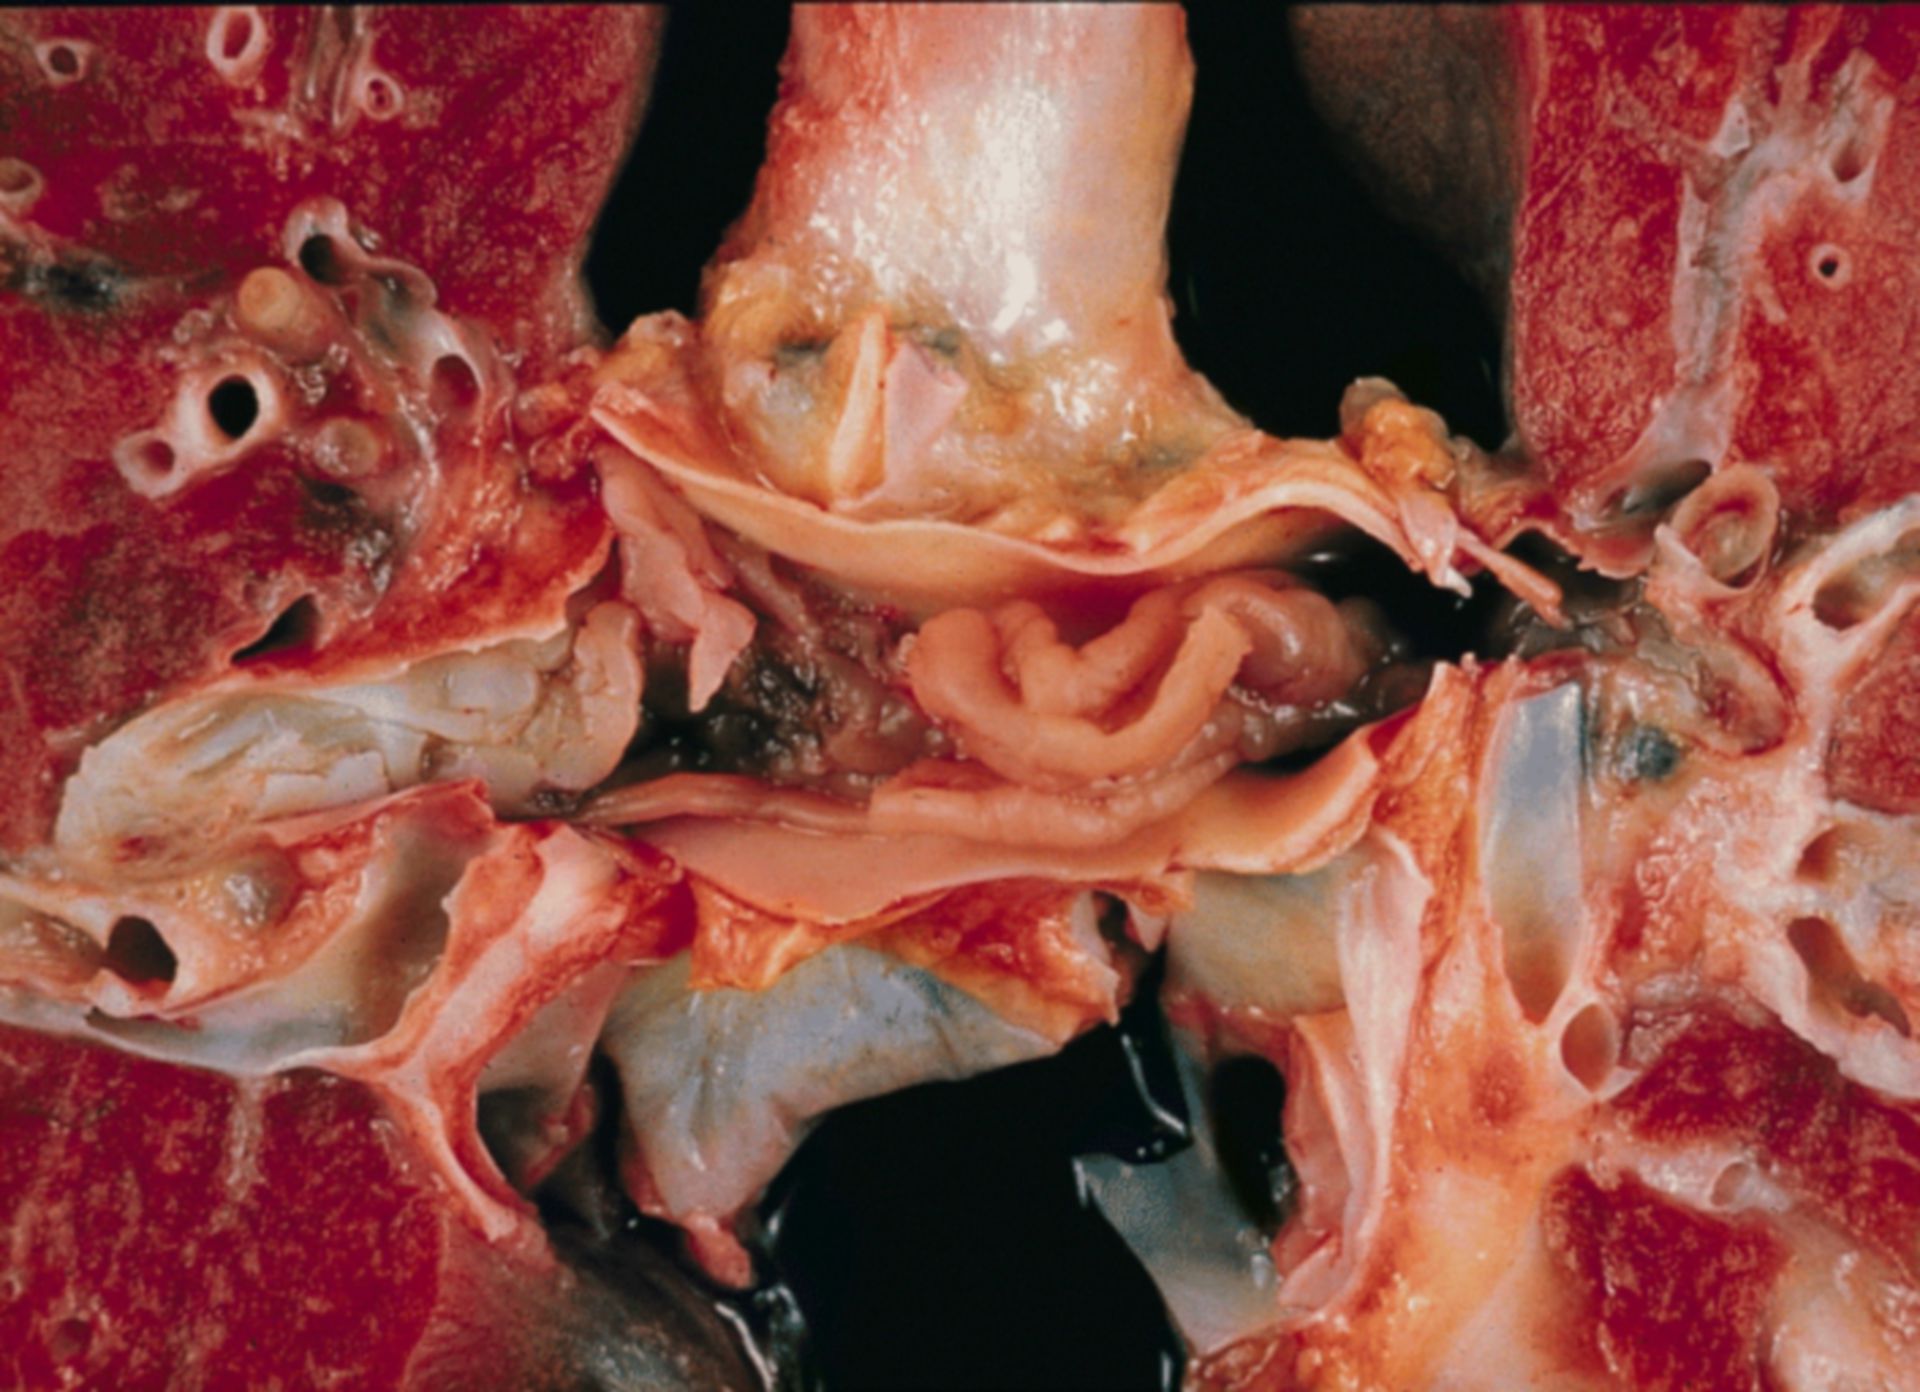 Lower respiratory tract: intra-arterial metastasis to the main pulmon